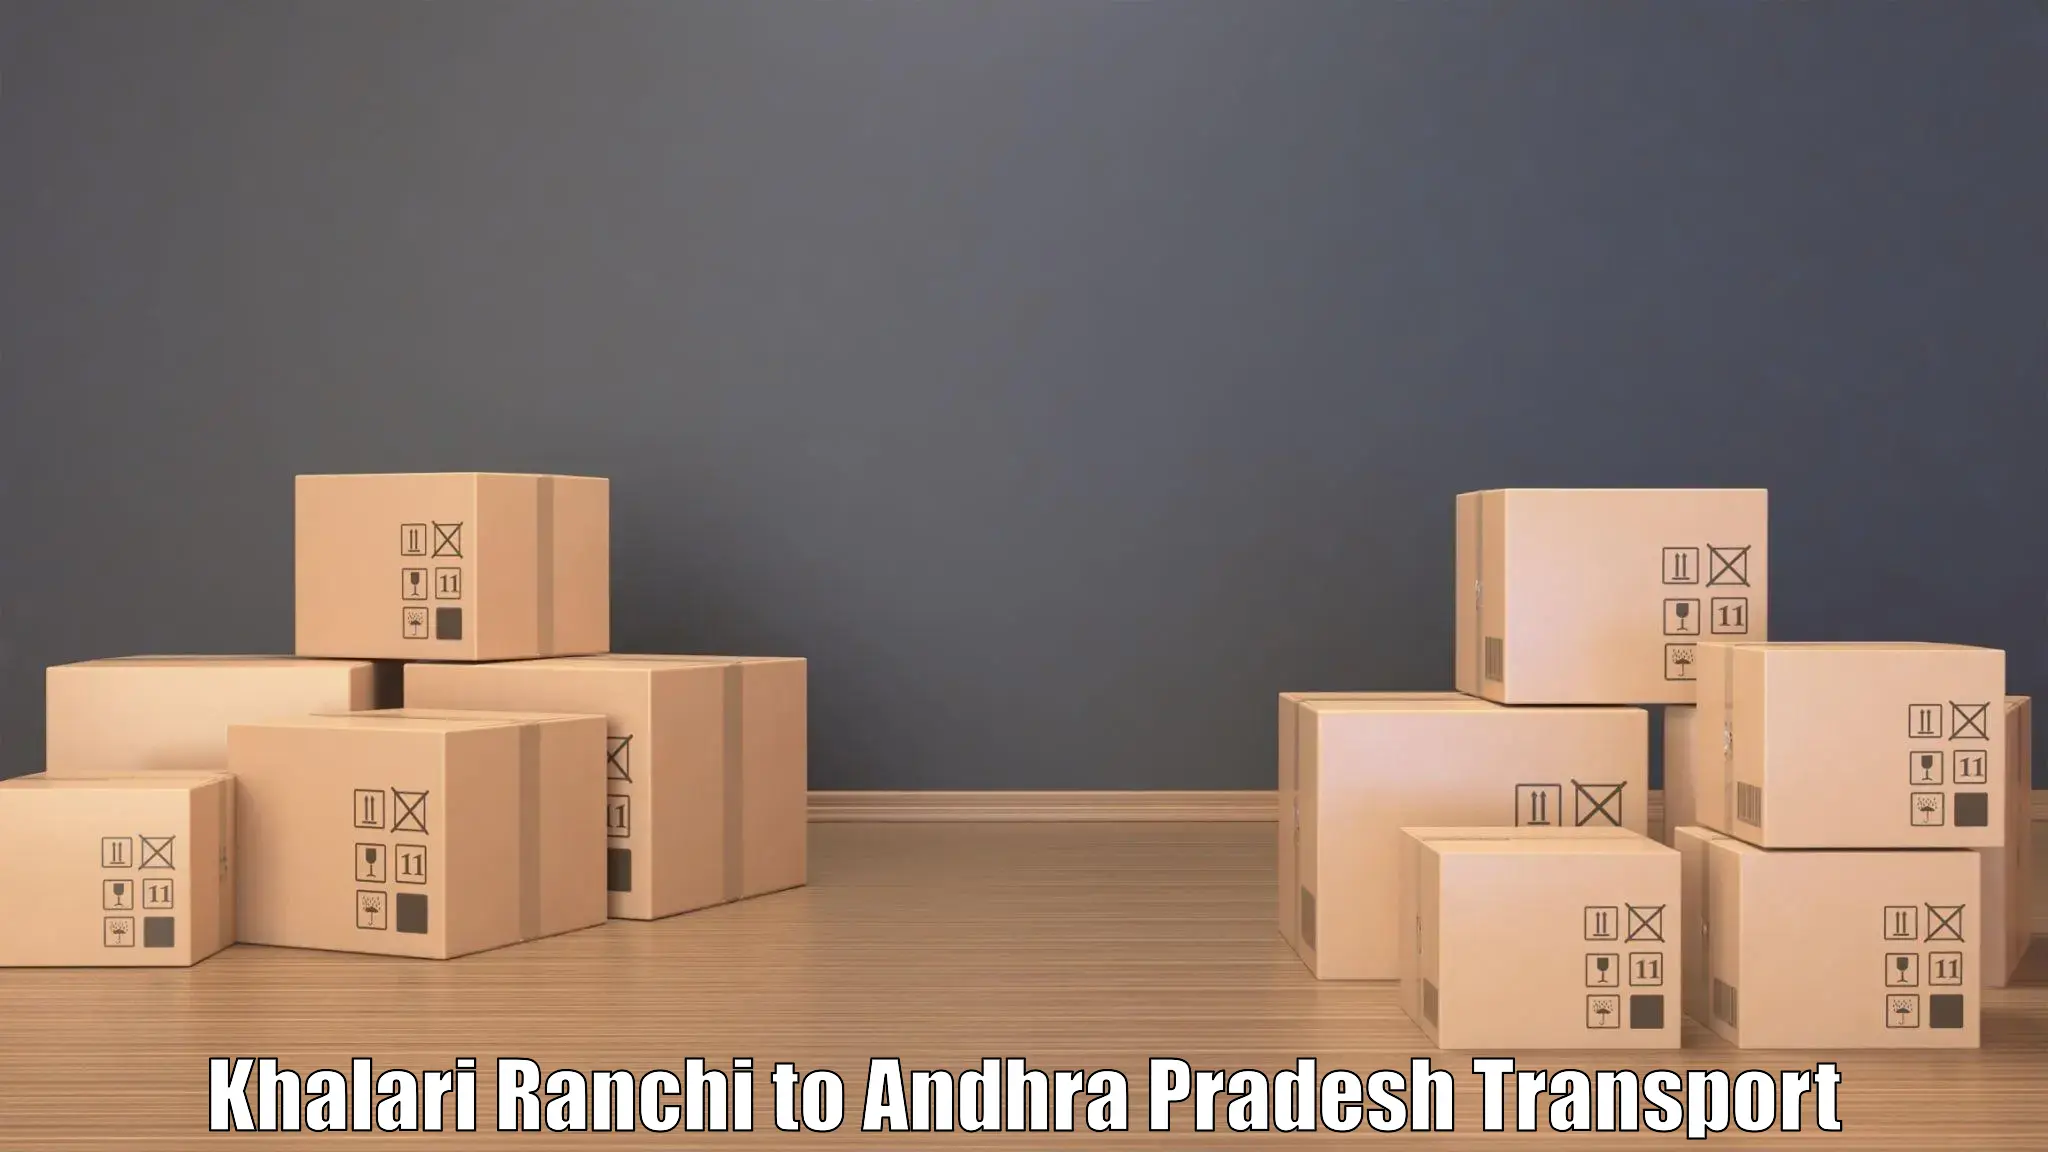 Transport bike from one state to another Khalari Ranchi to Andhra Pradesh